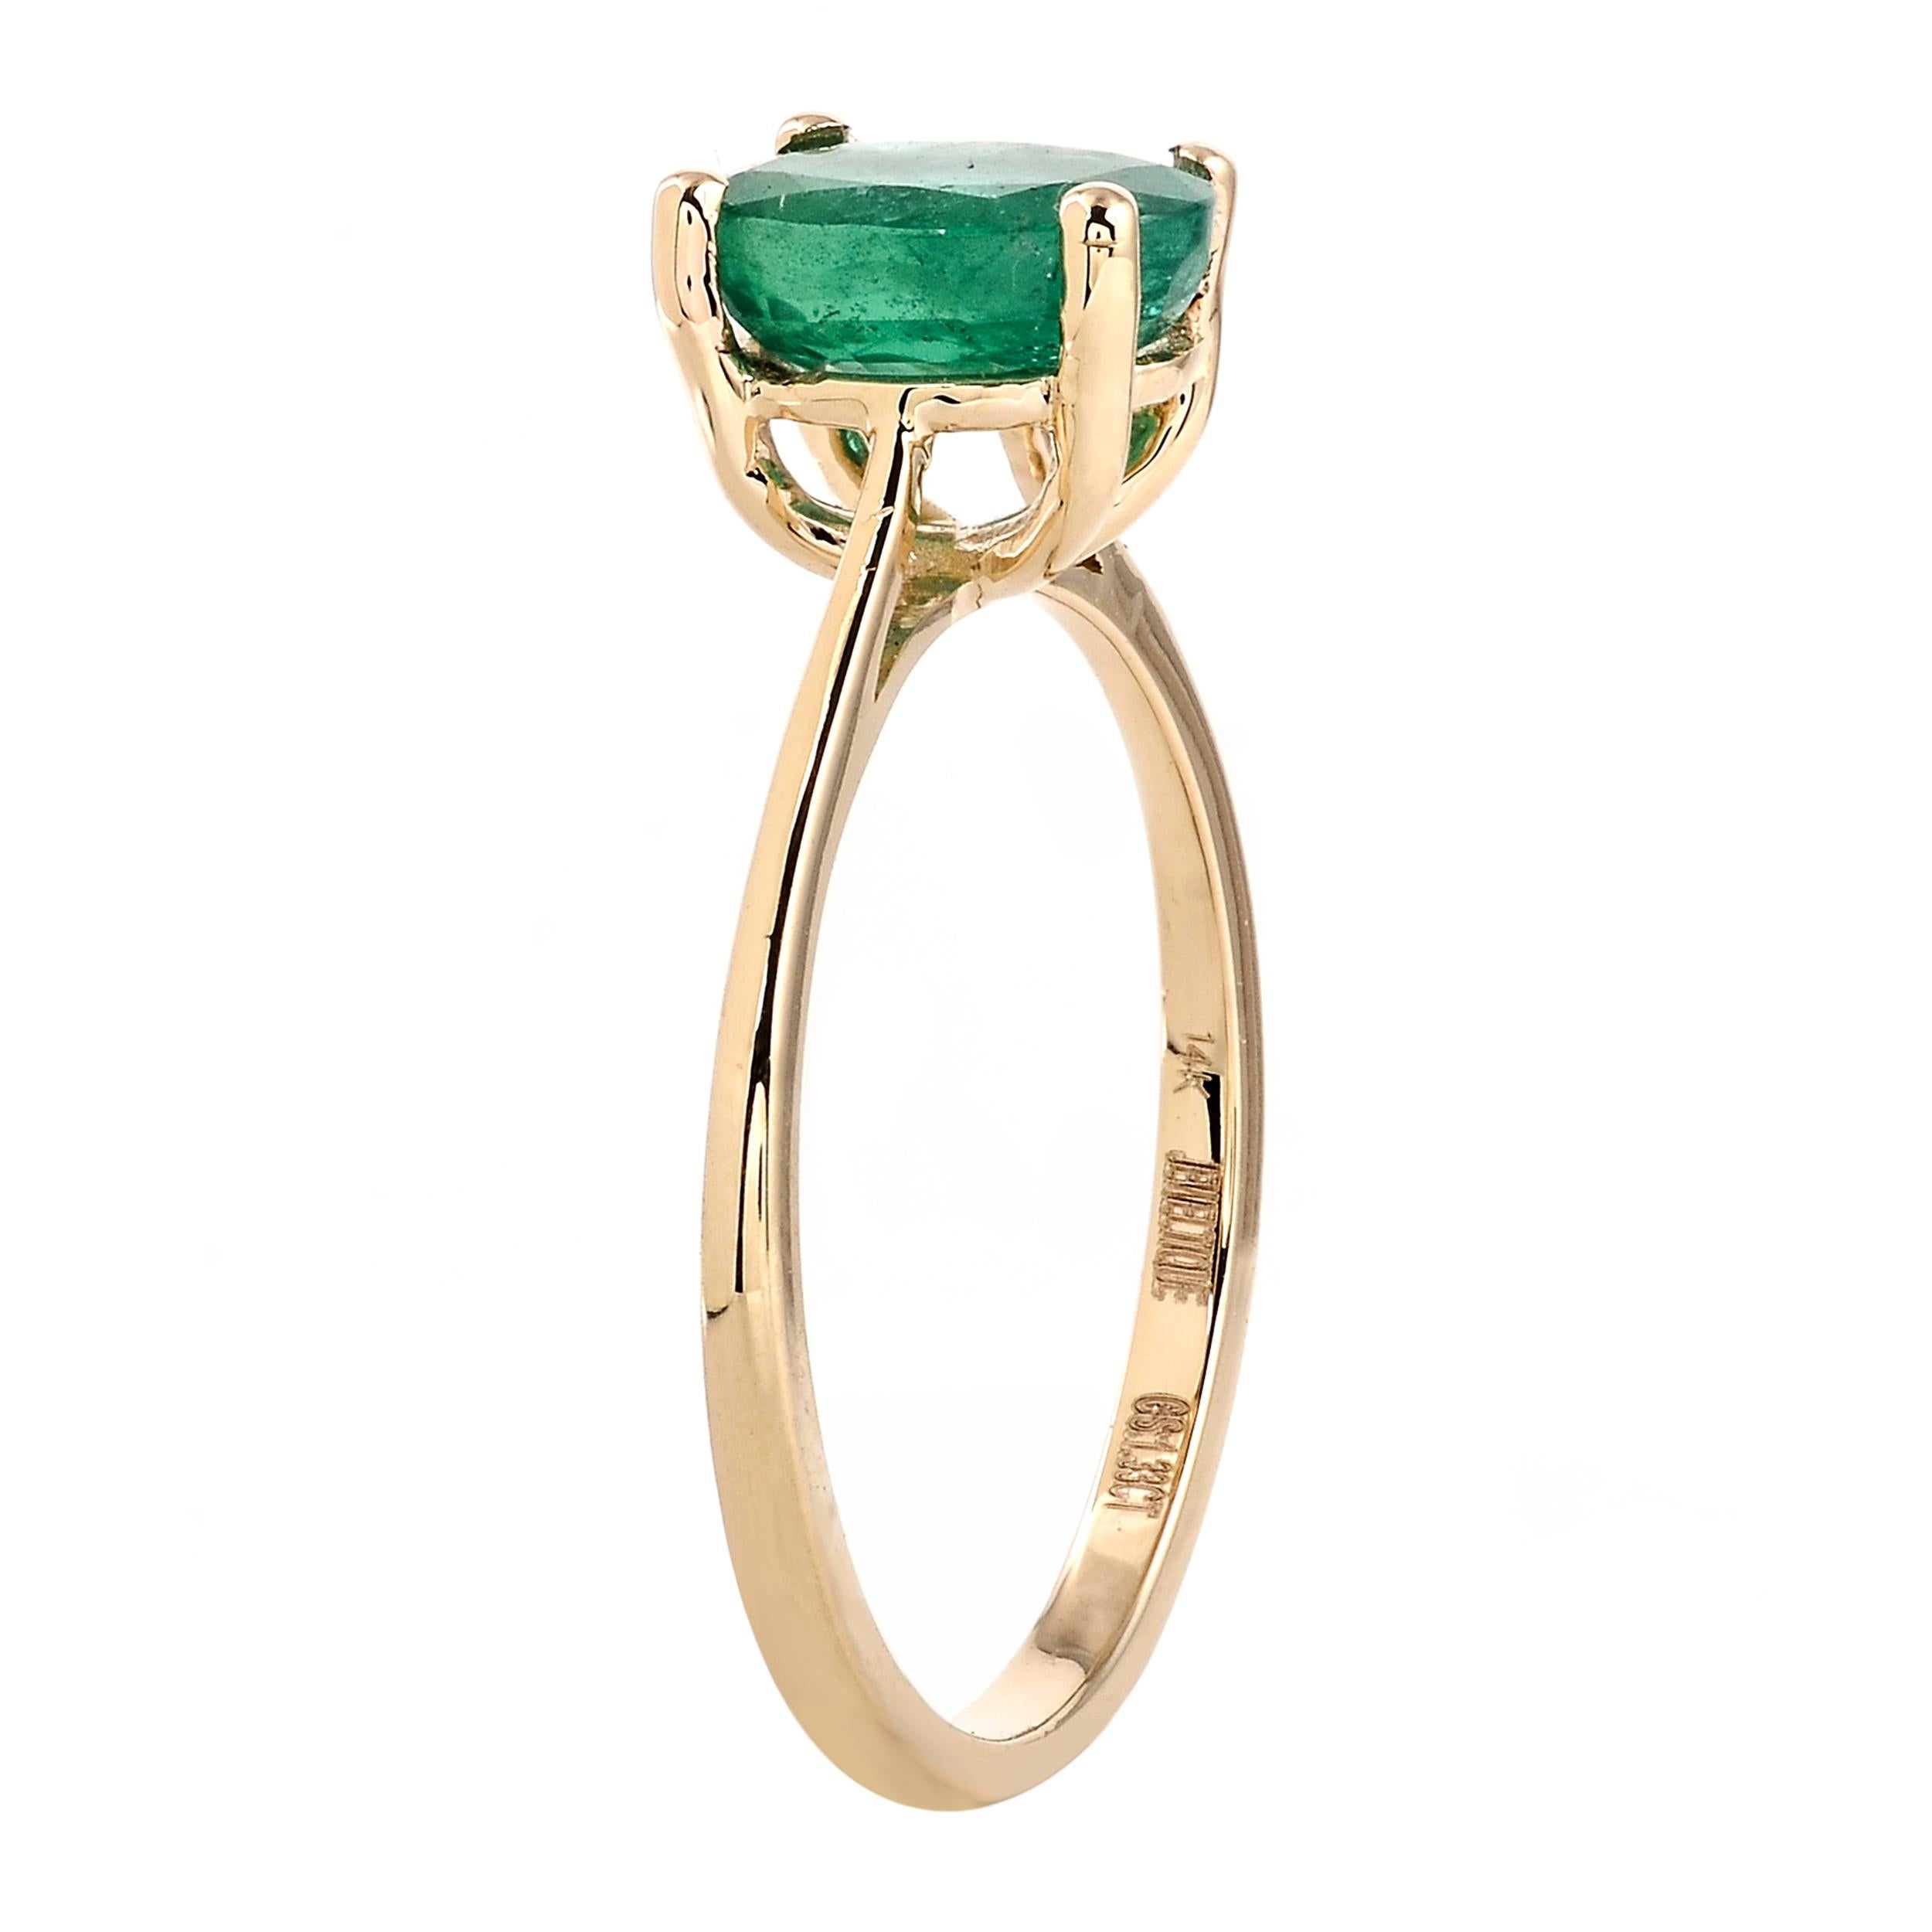 Emerald Cut Elegant 14K 1.33ct Emerald Cocktail Ring, Size 7 - Timeless & Elegant Jewelry